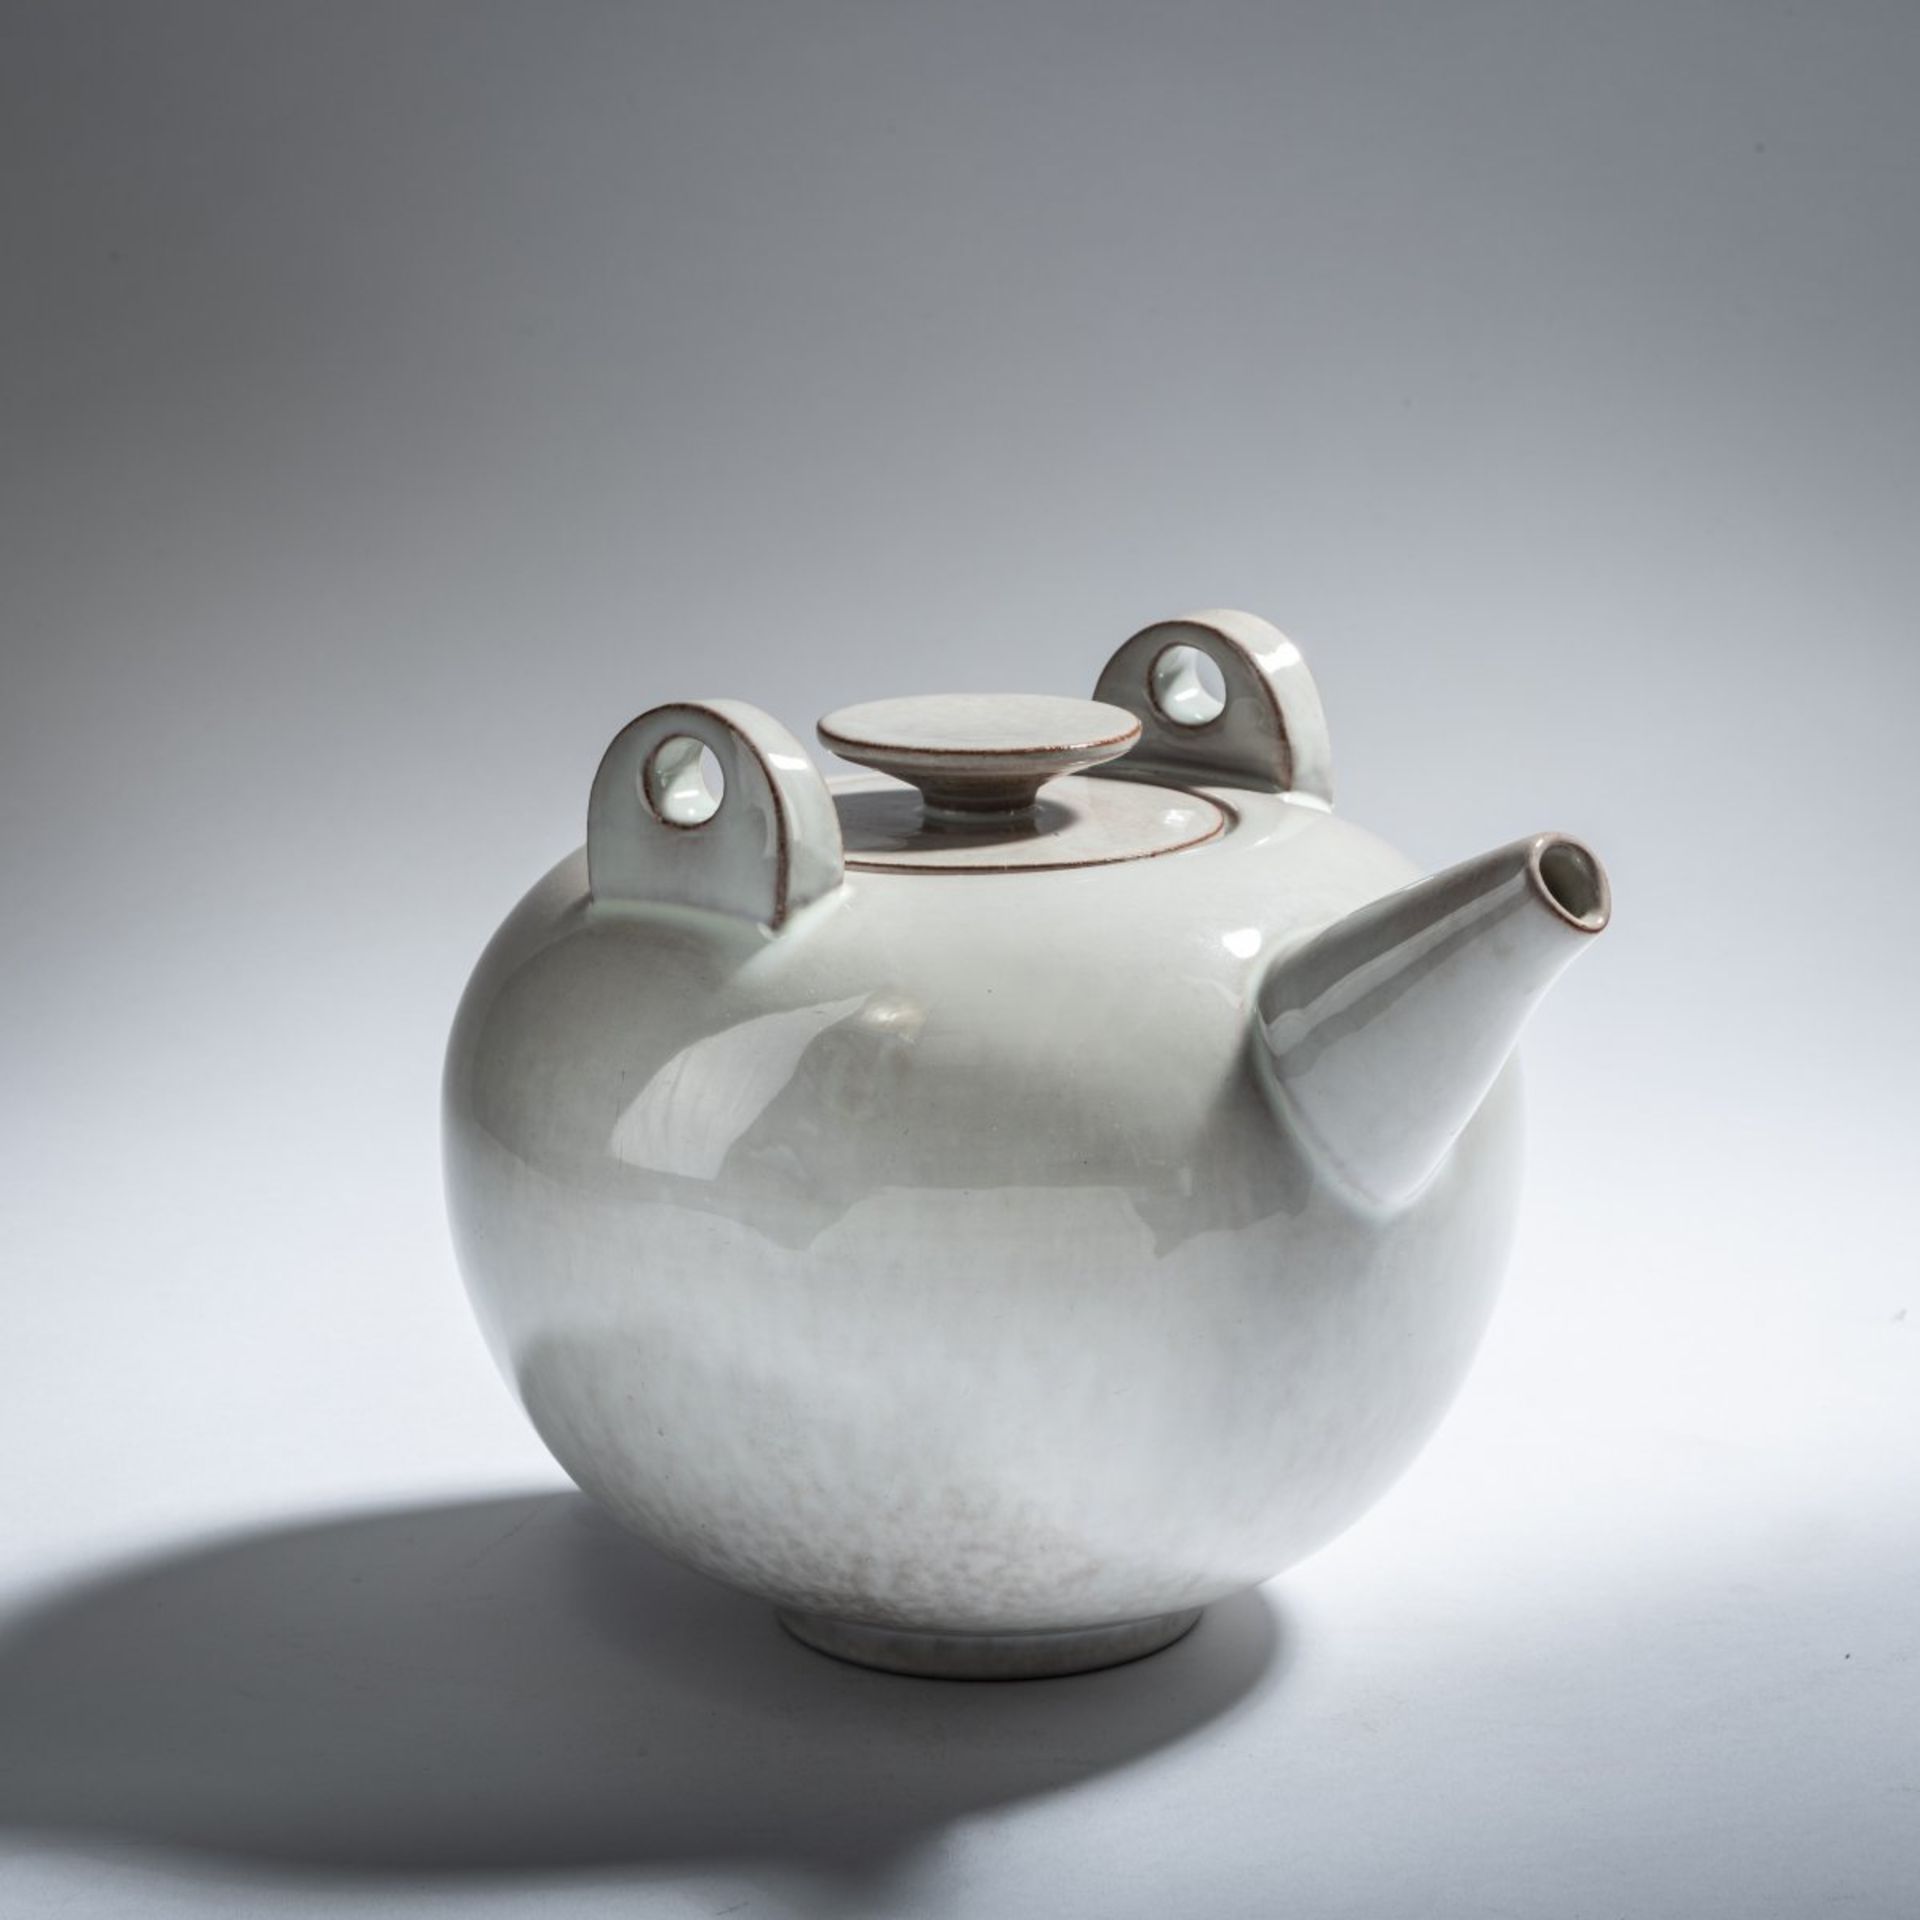 Otto Lindig, Teapot, 1920-25